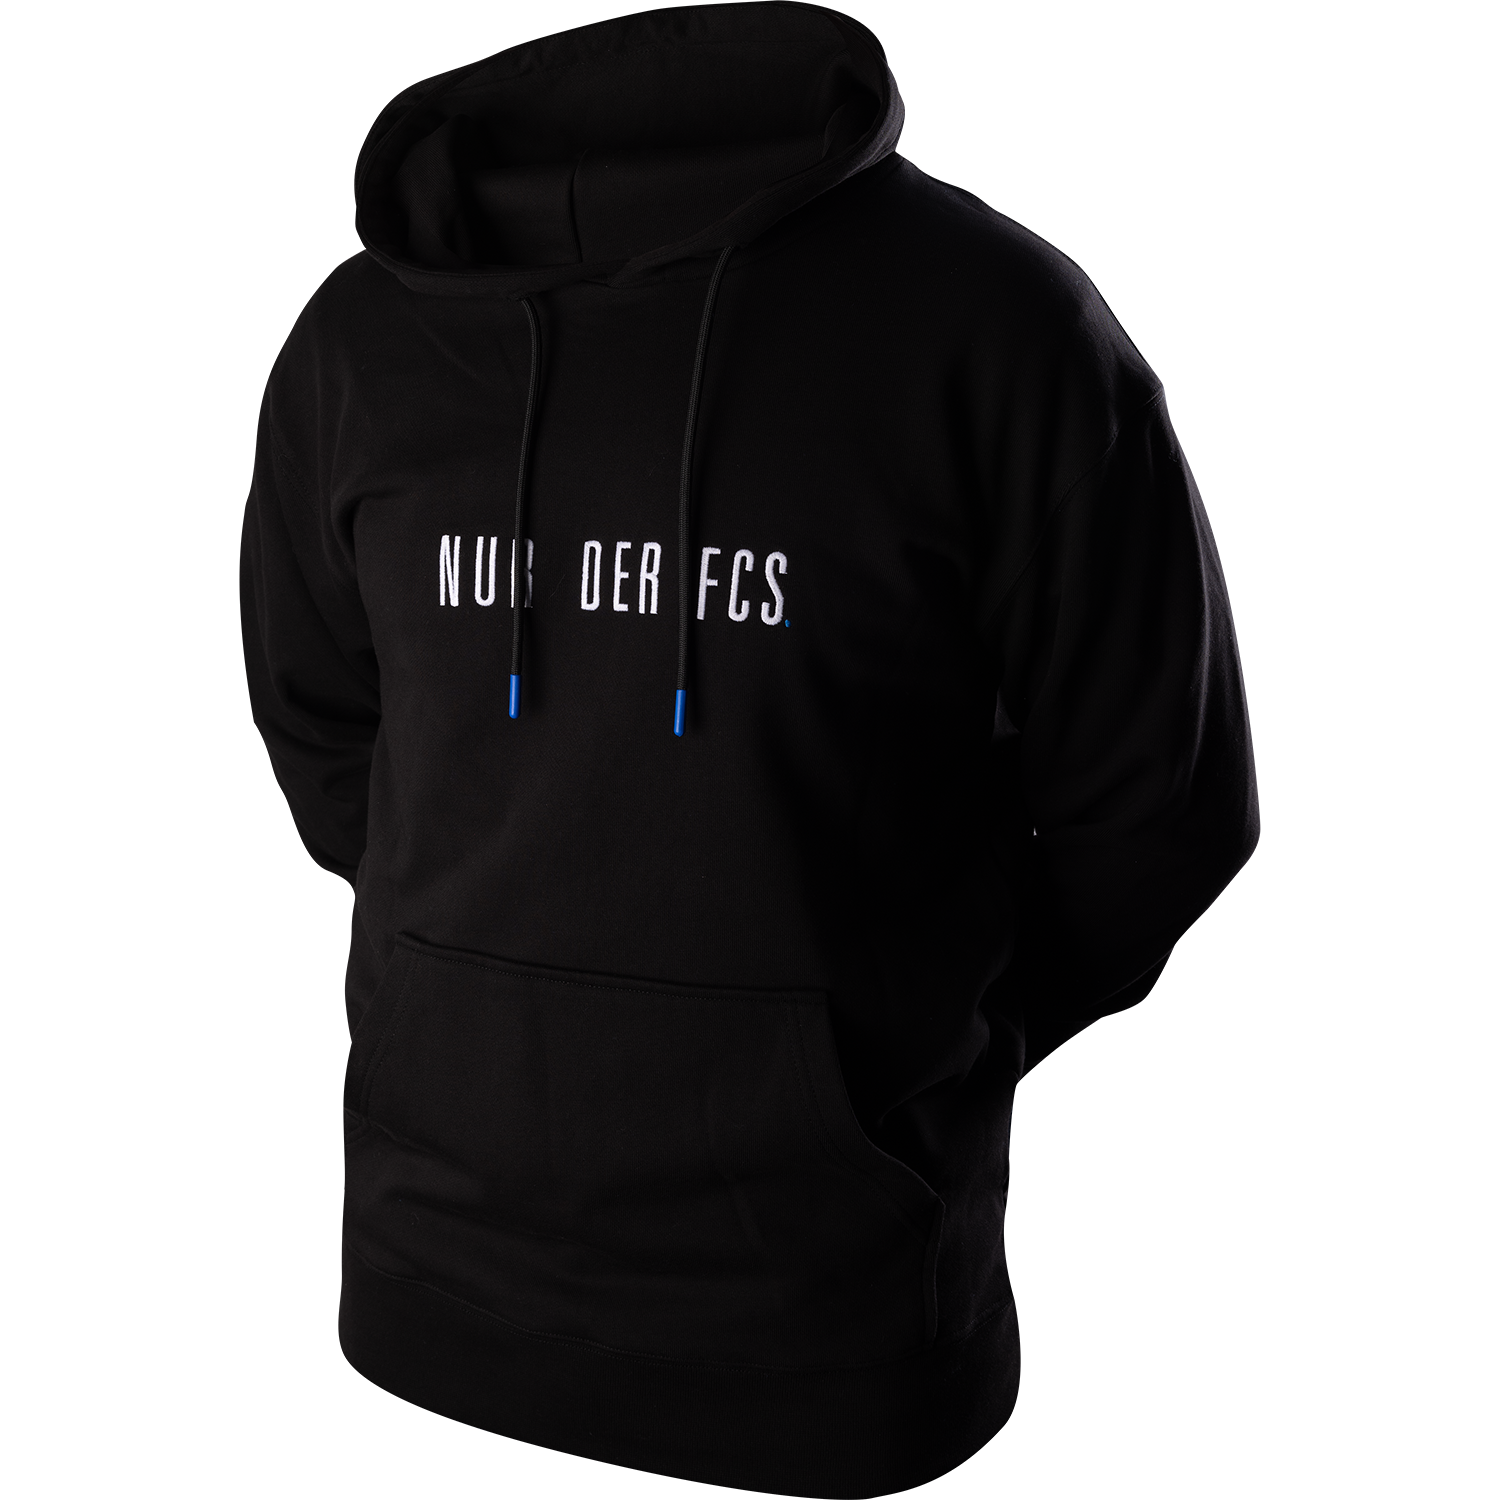 FCS-Hoodie NURDERFCS - Quer-Schriftzug -